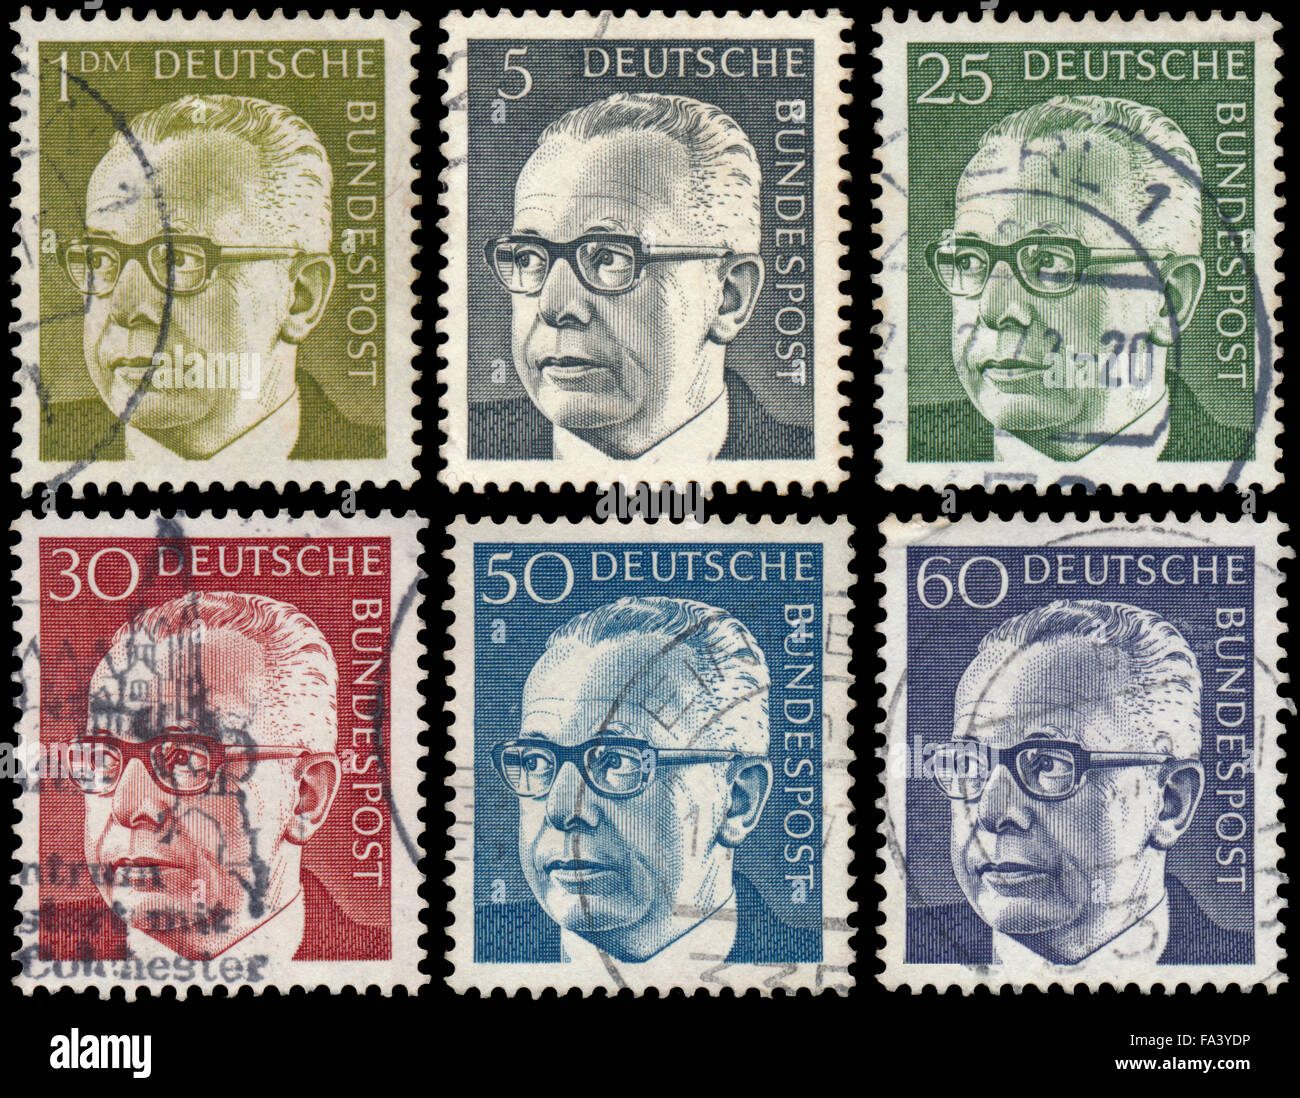 GERMANY - CIRCA 1970: stamps printed in Germany, show portrait of Gustav Walter Heinemann Stock Photo